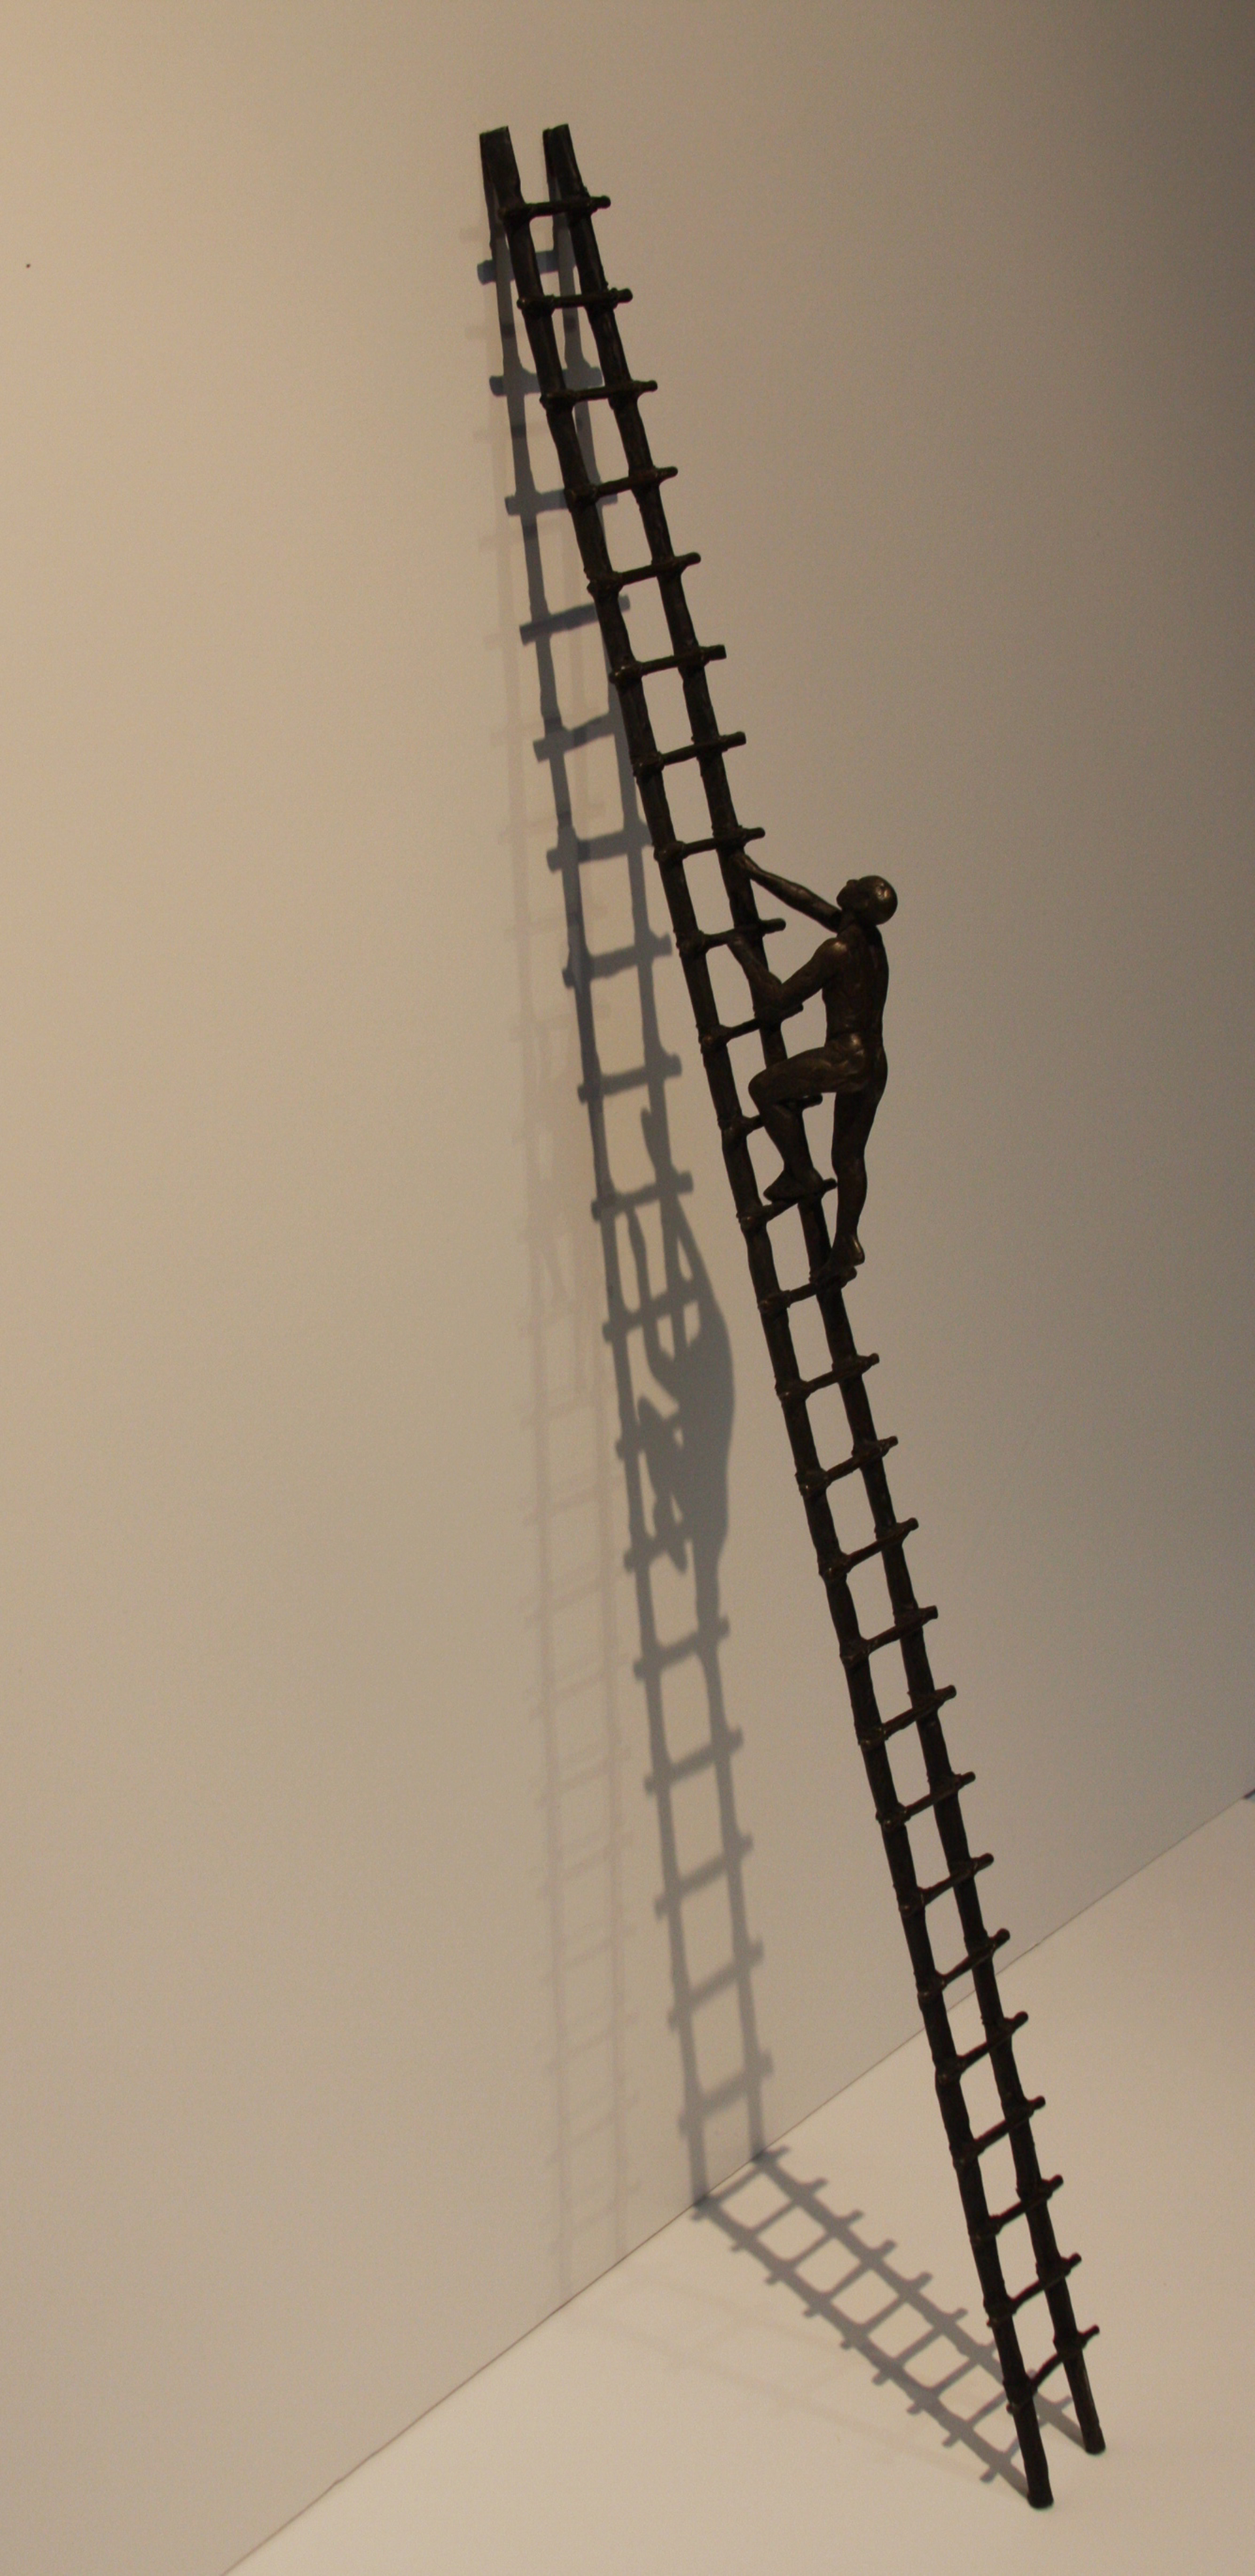 Solitary Climber by Bill Starke